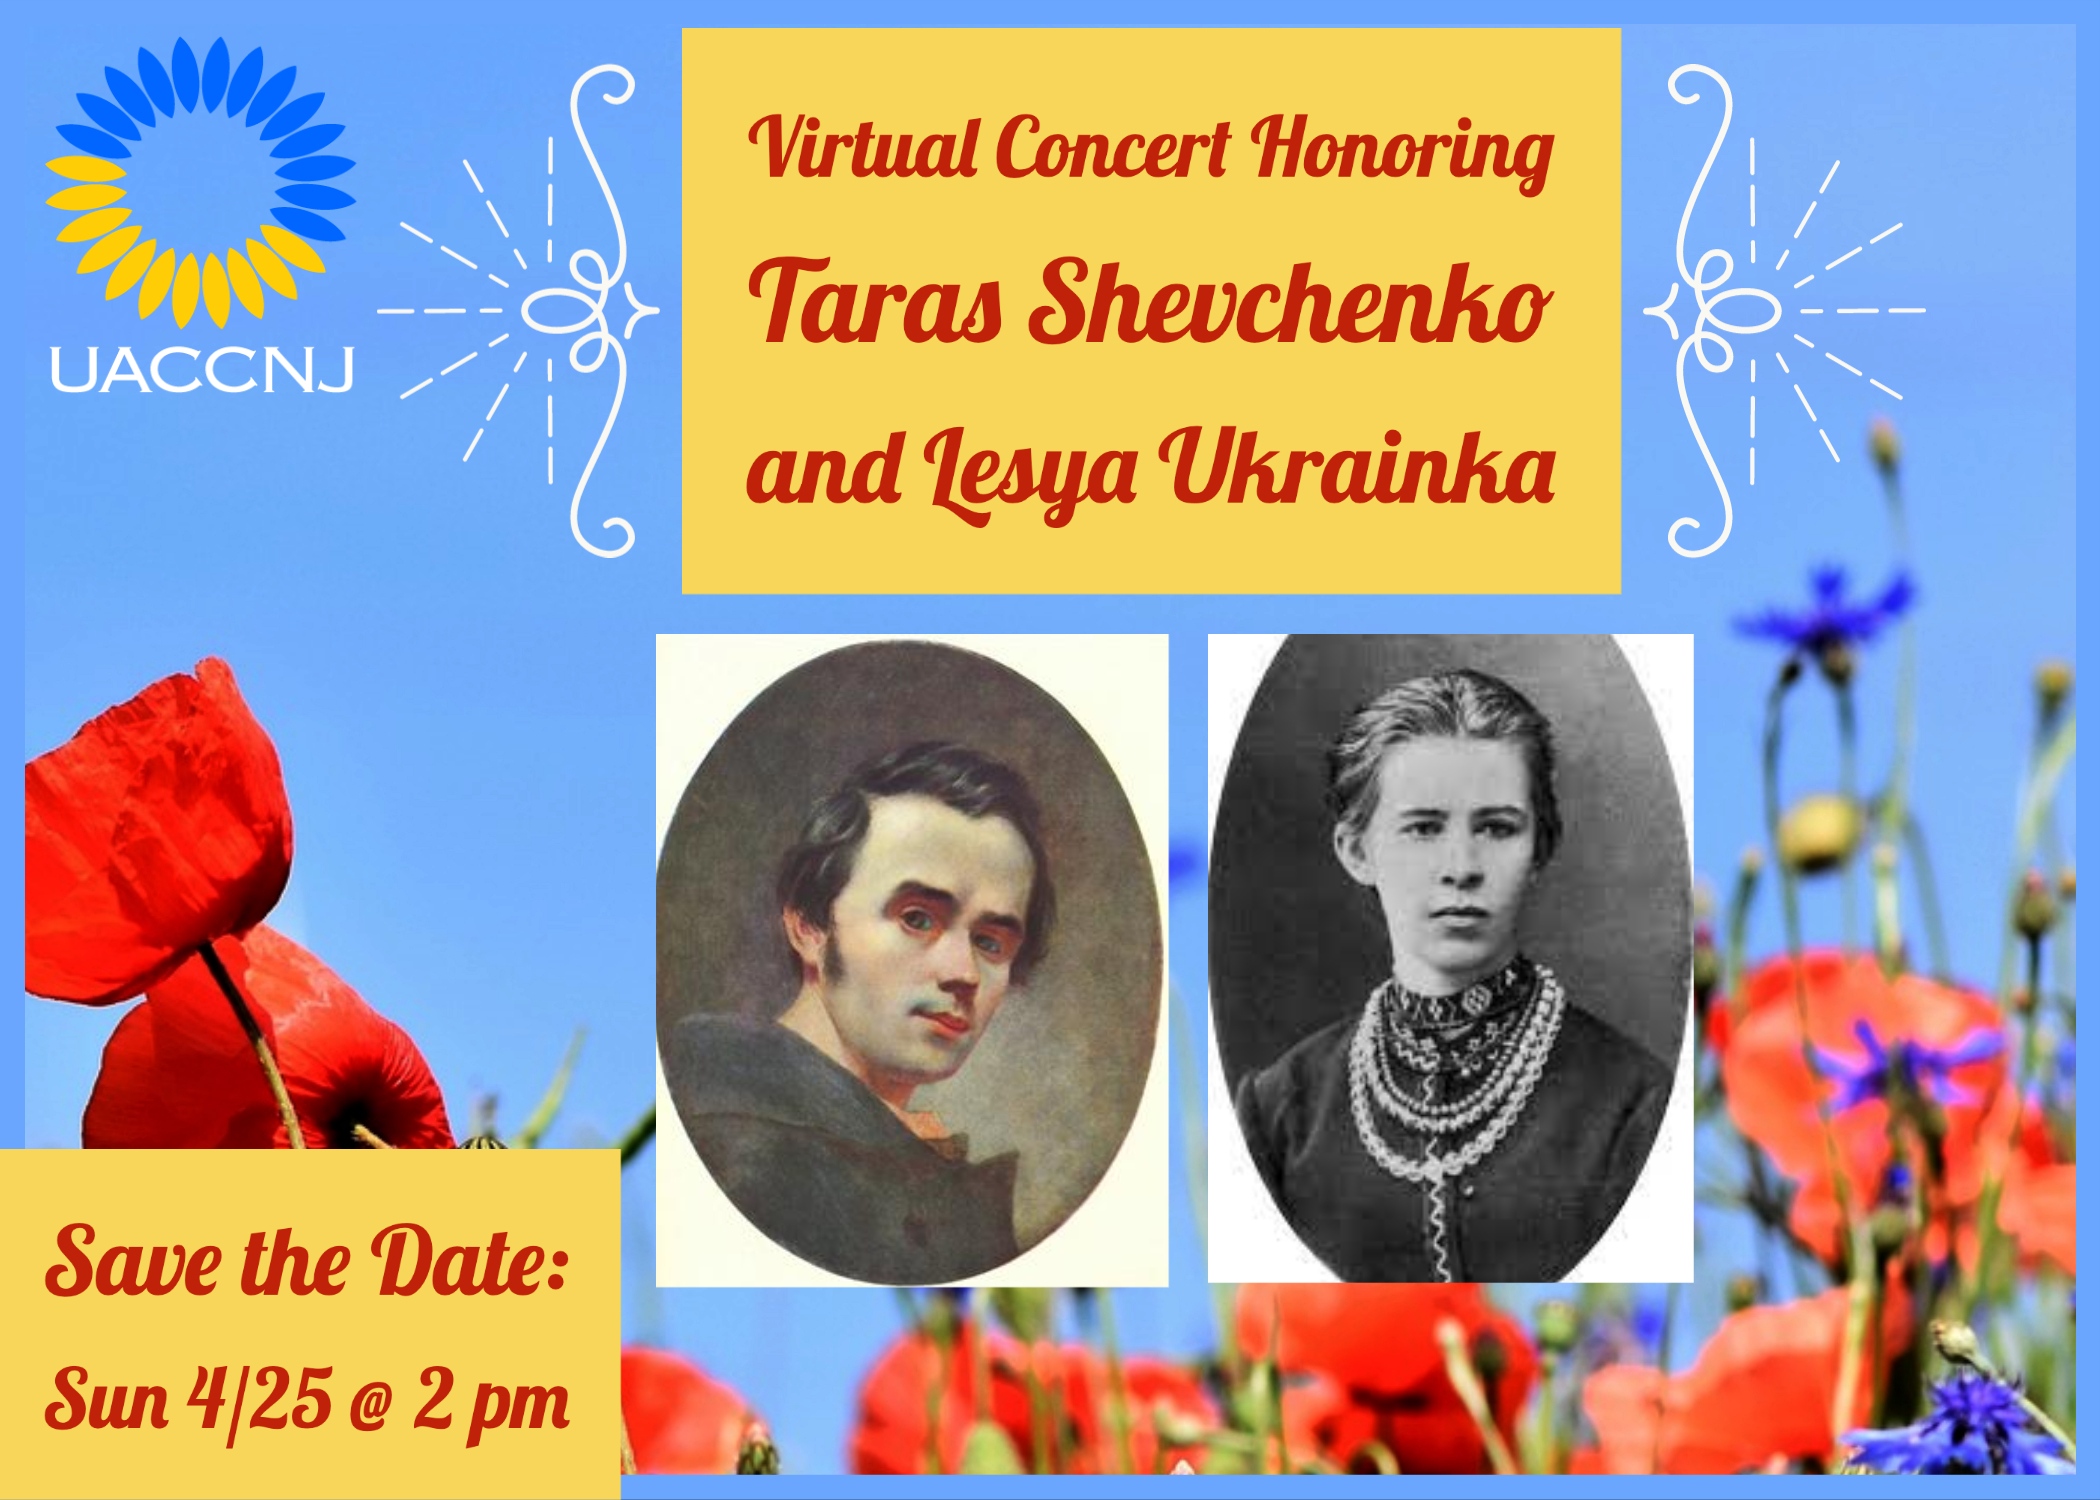 Virtual Concert Honoring Taras Shevchenko and Lesya Ukrainka